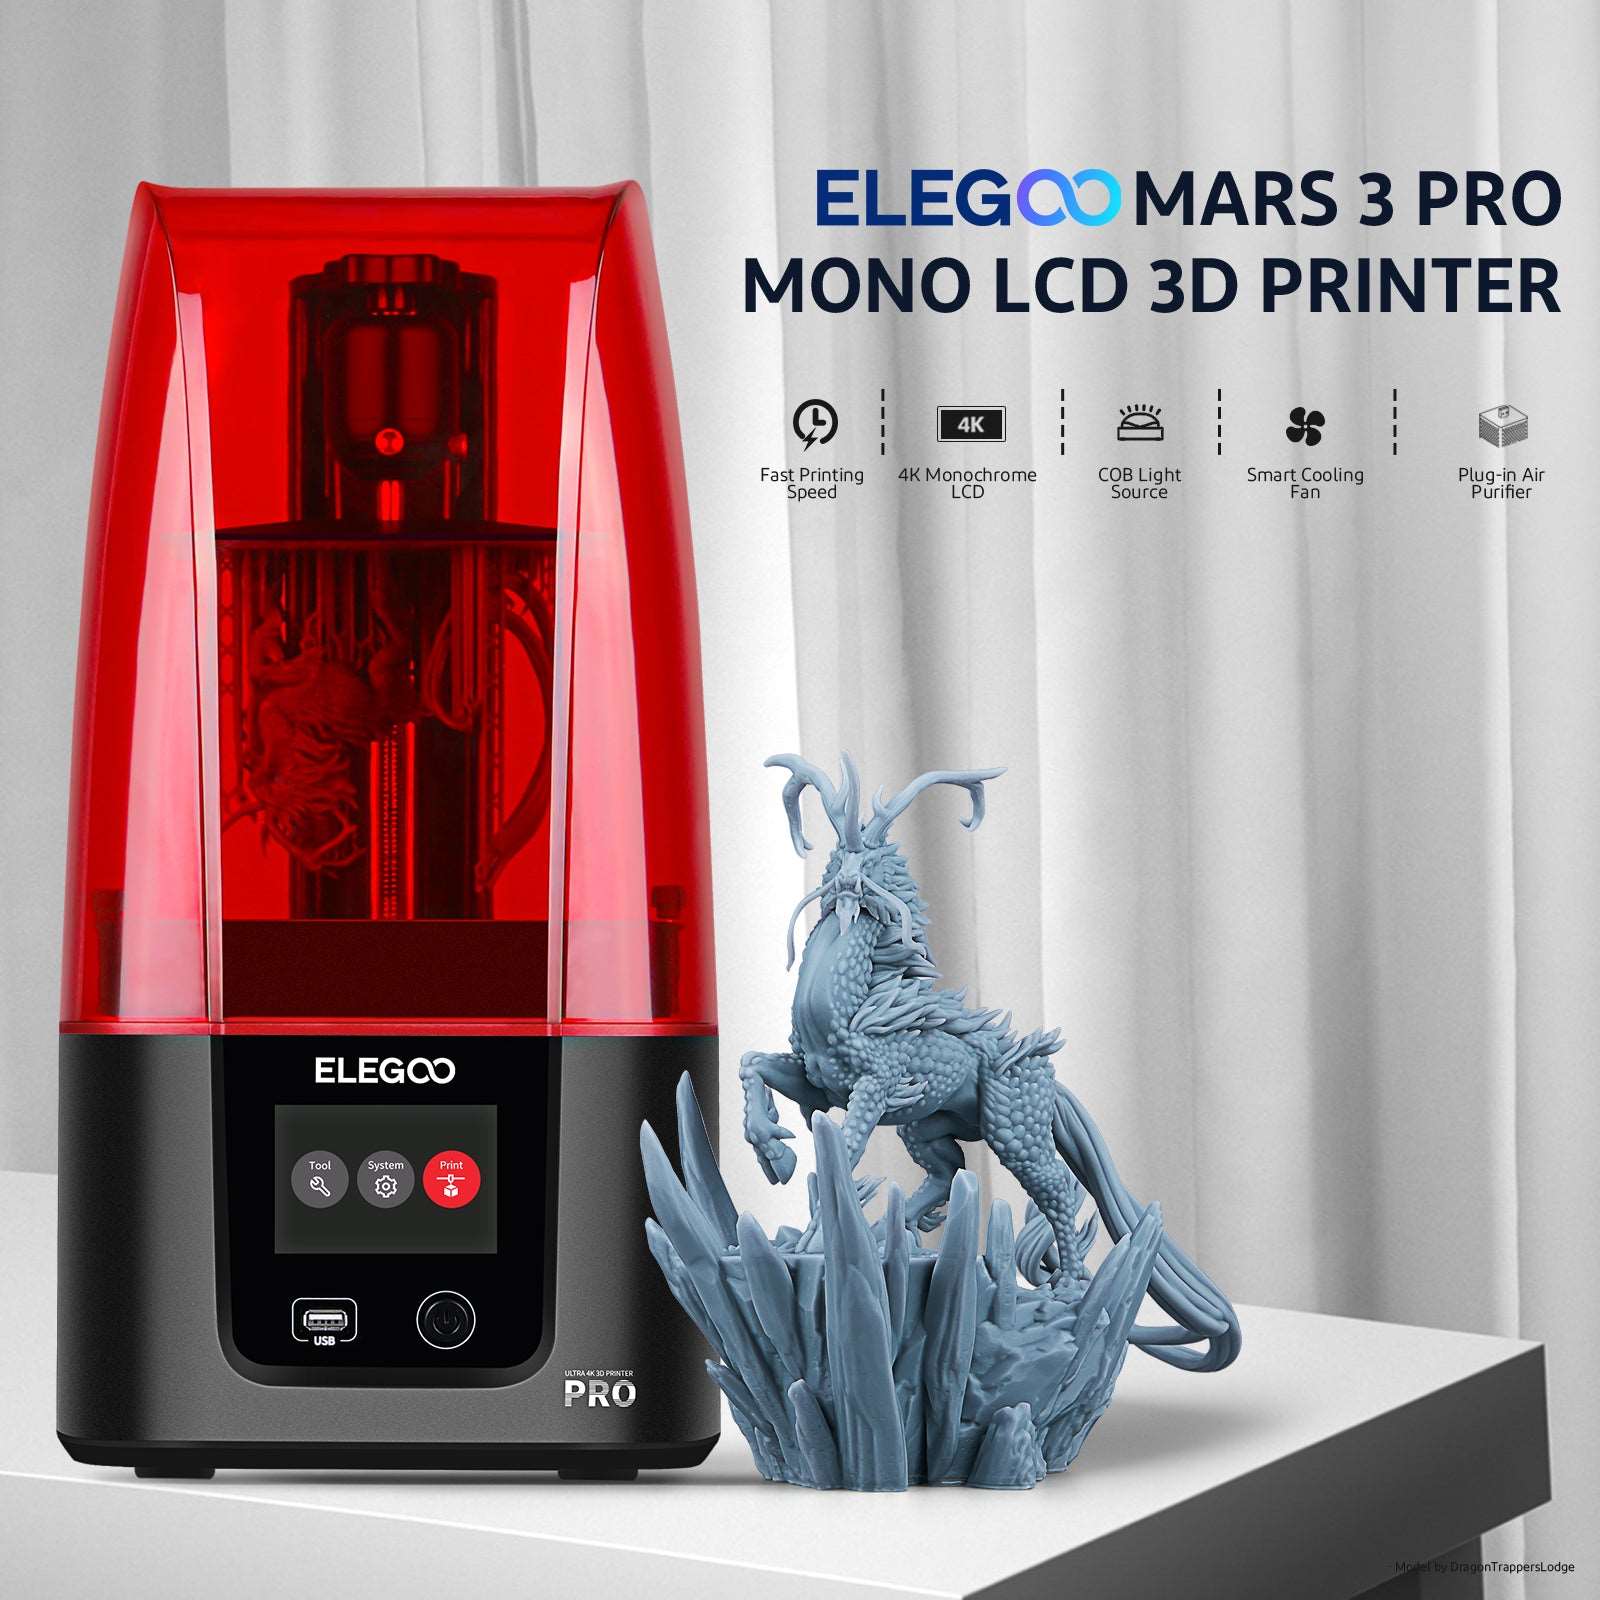 ELEGOO Mars 3 Pro mSLA Resin 3D Printer with 4K Mono LCD